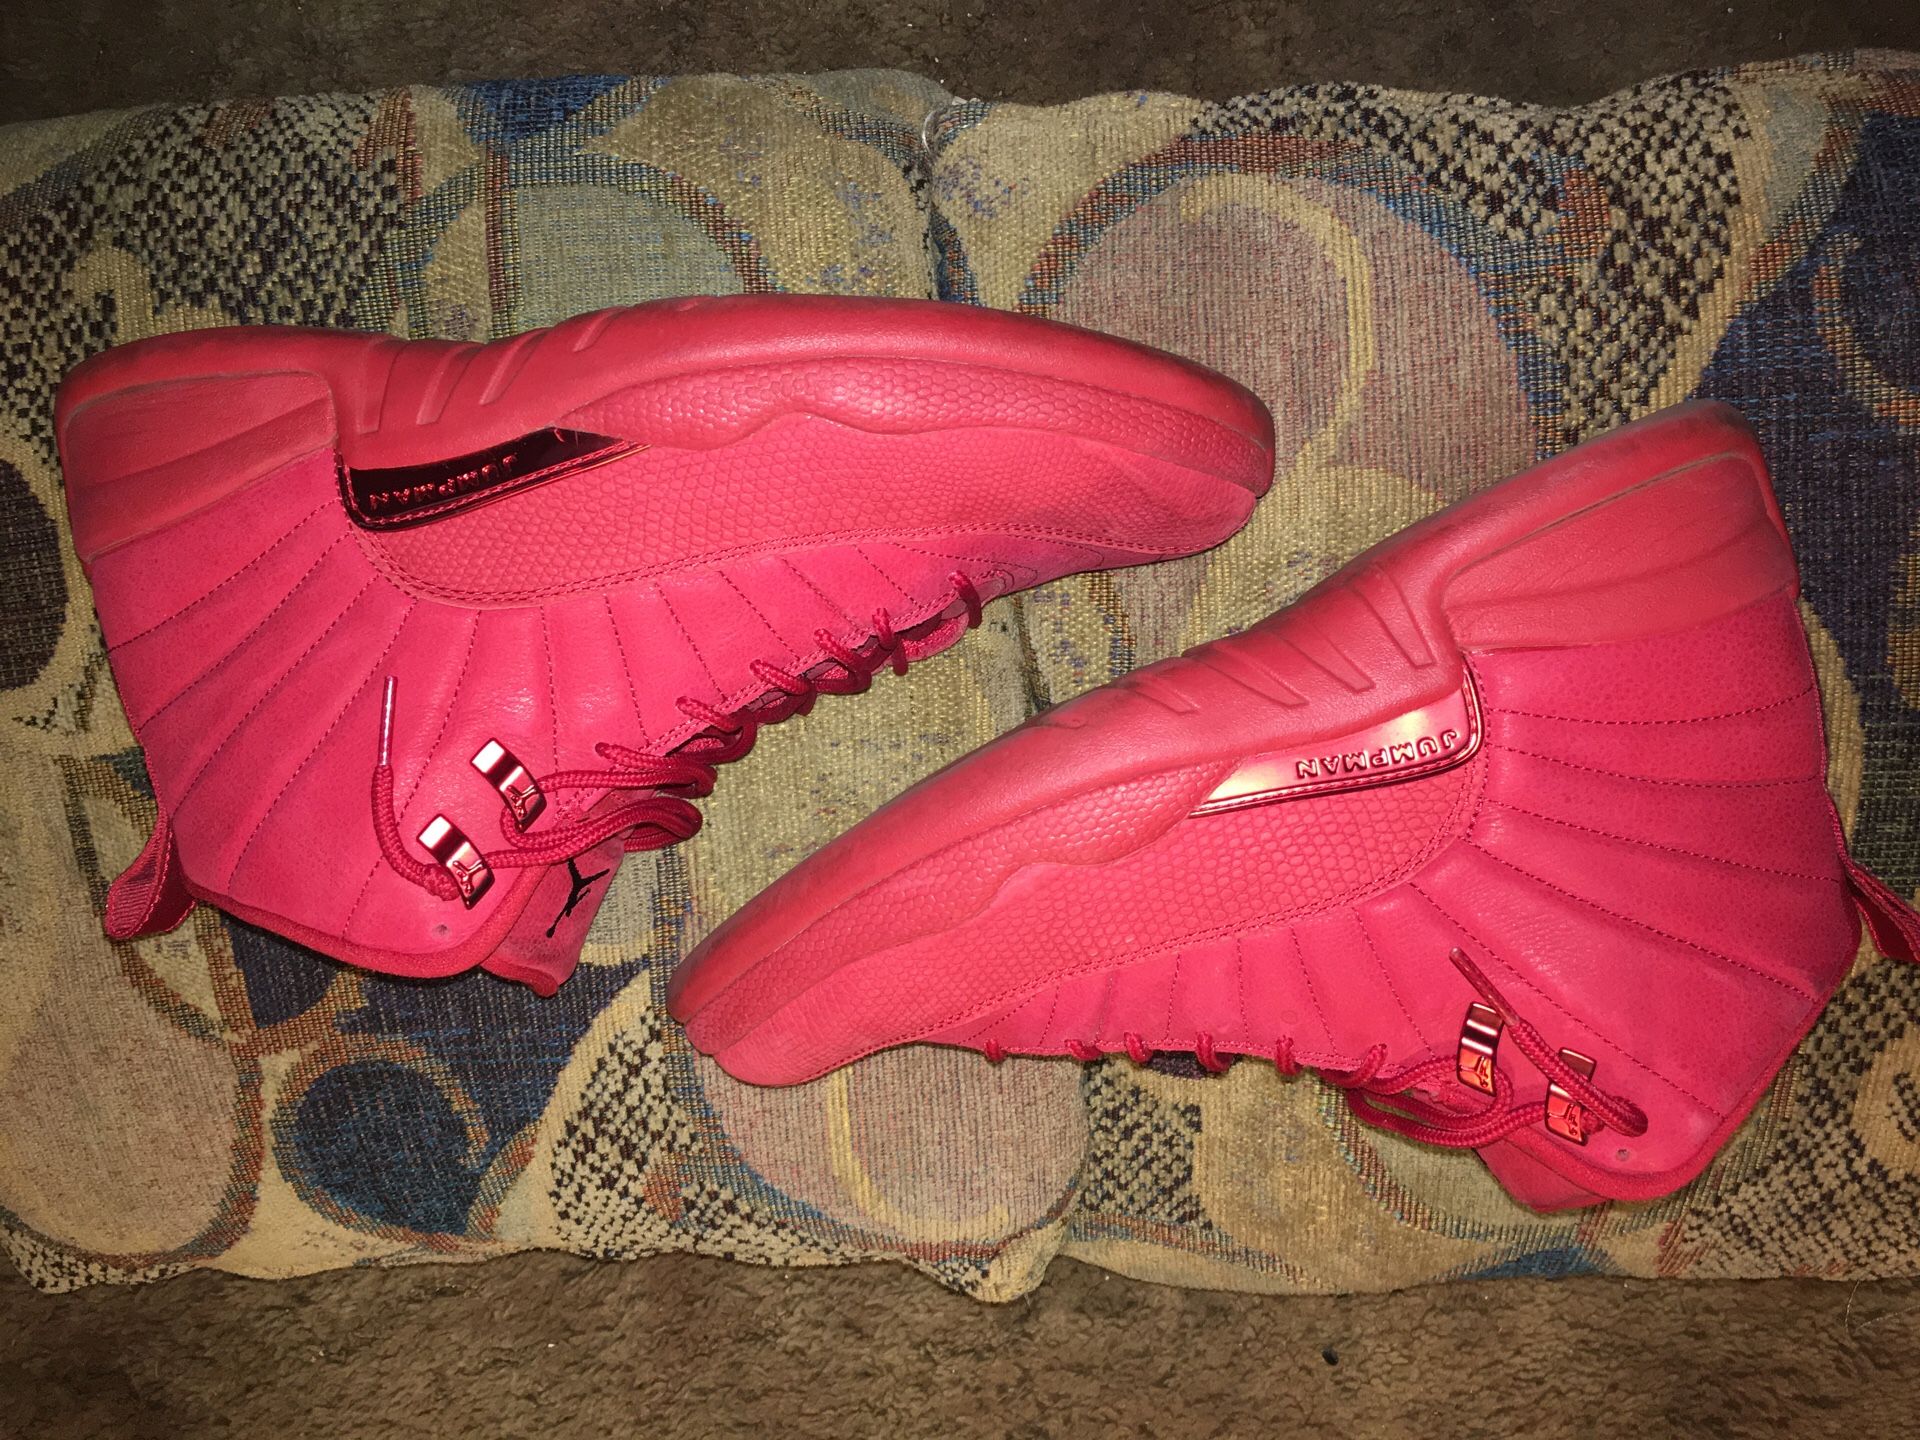 Jordan 12s Red (Size 11)